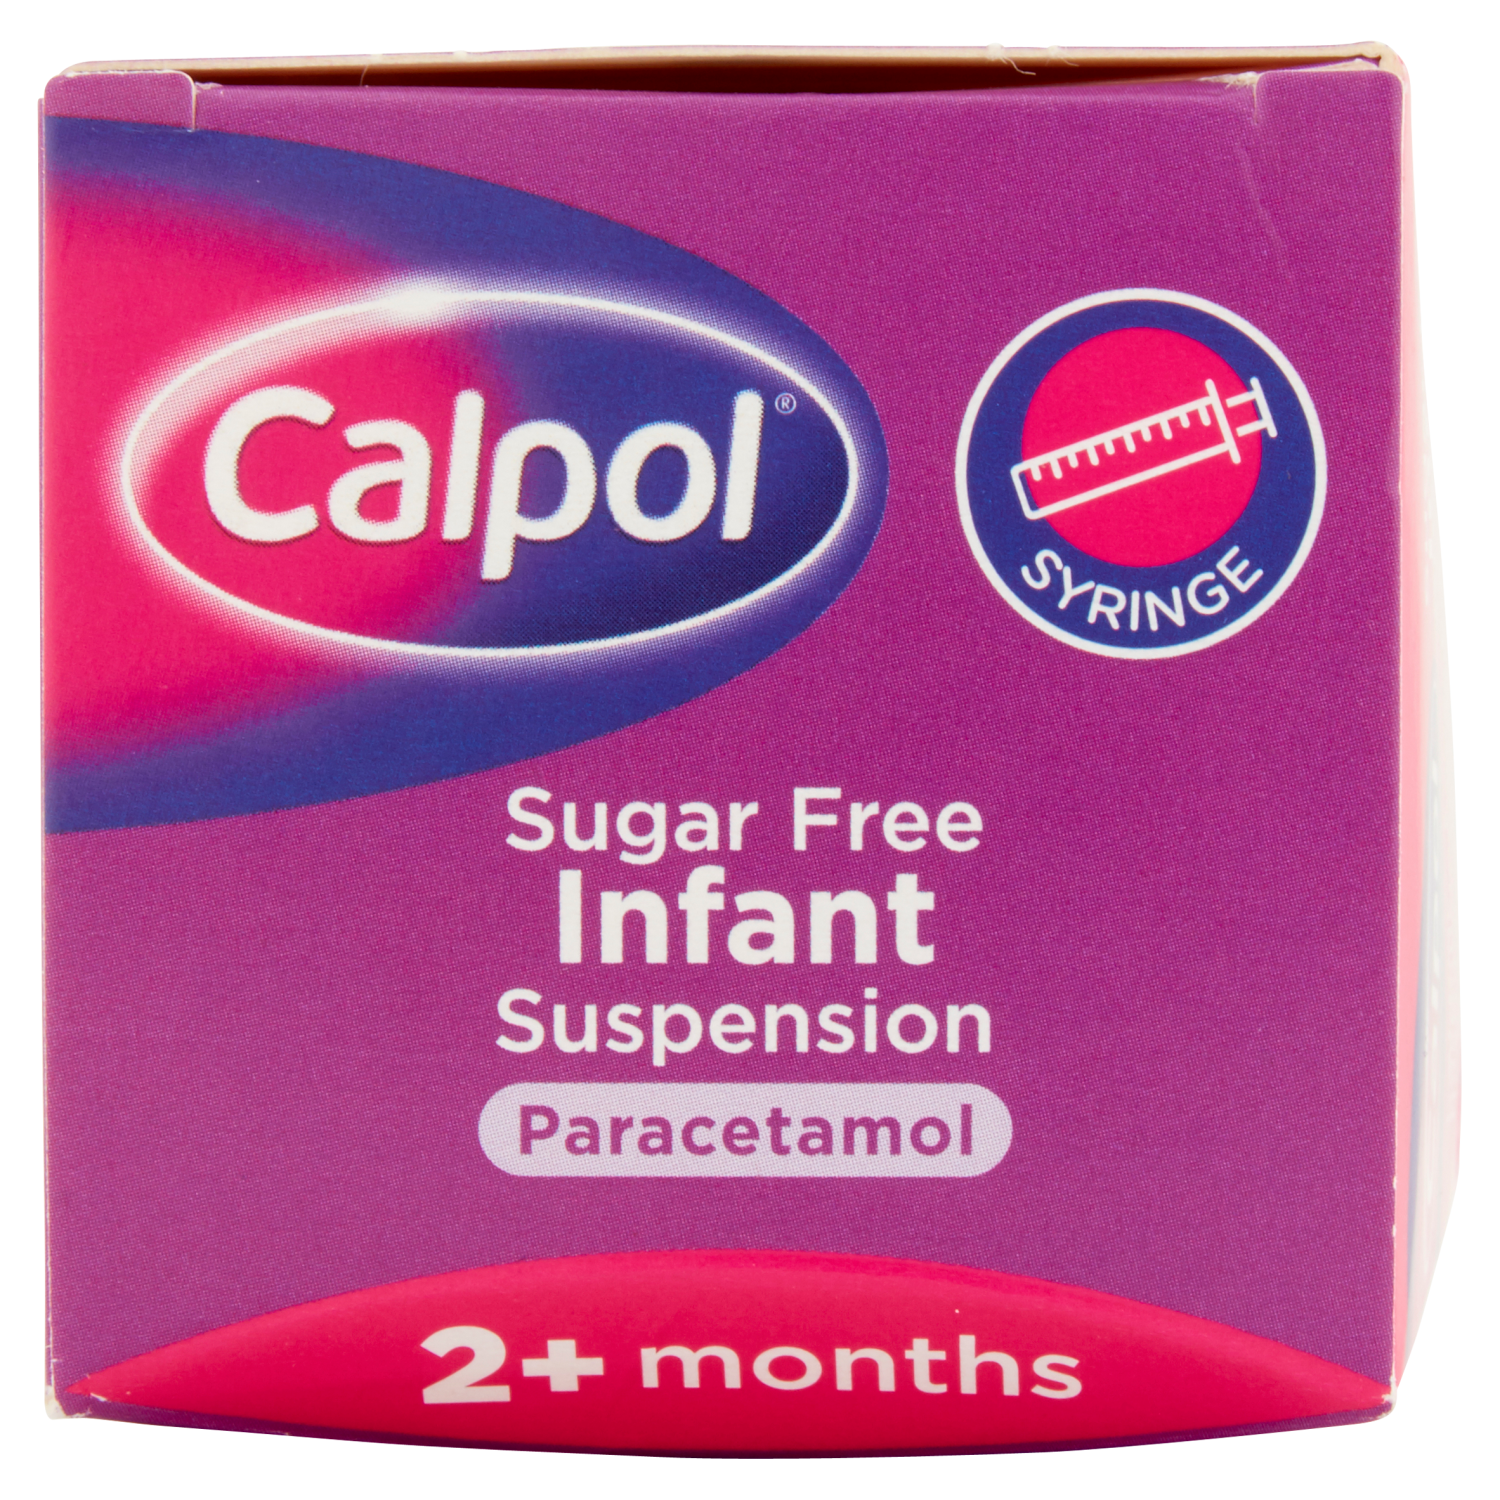 Calpol Sugar Free Infant Suspension (Strawberry Flavour) 100ml